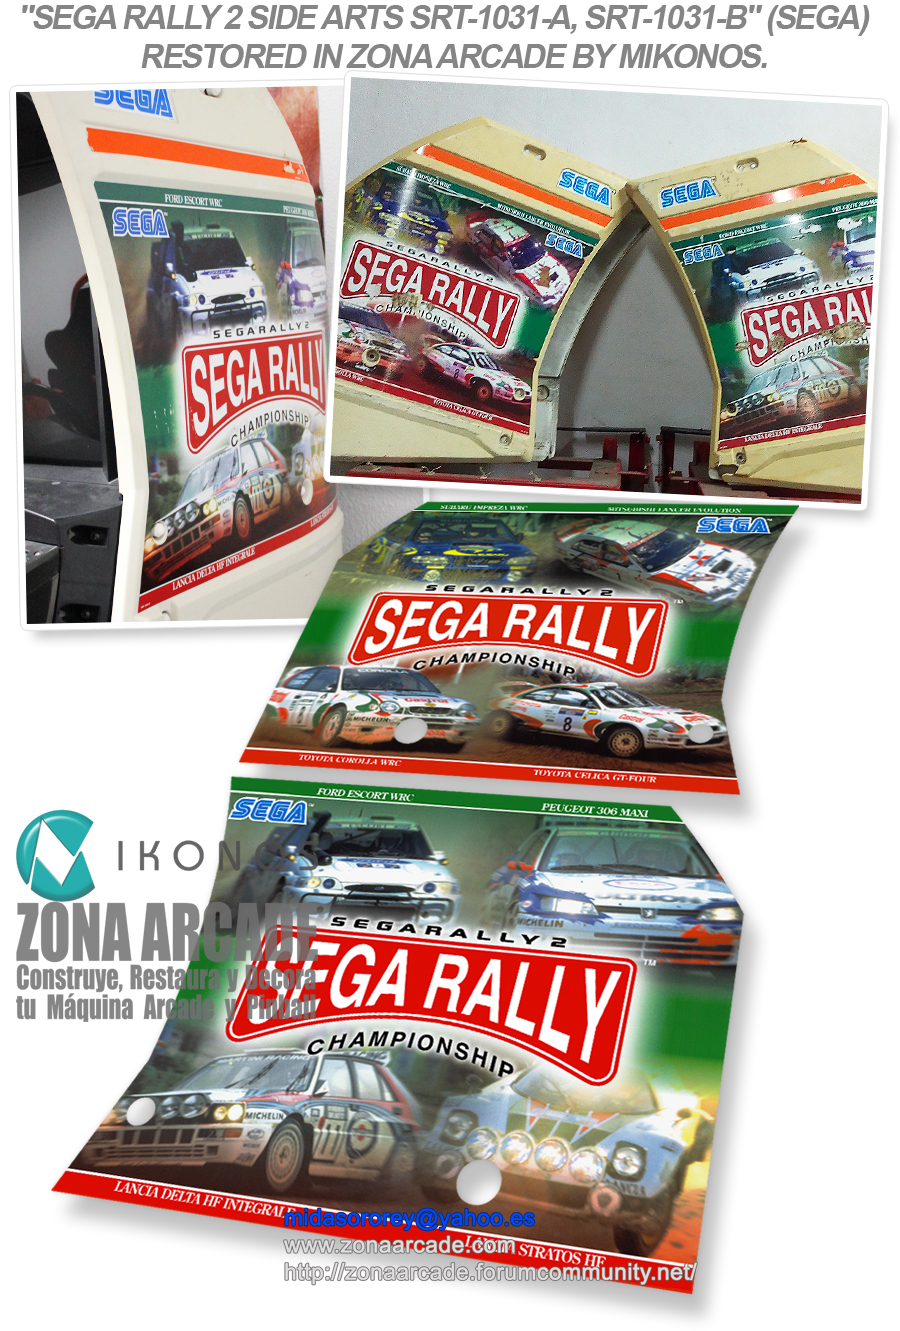 Sega-Rally-2-Side-Arts-Model1-Restored-Mikonos1